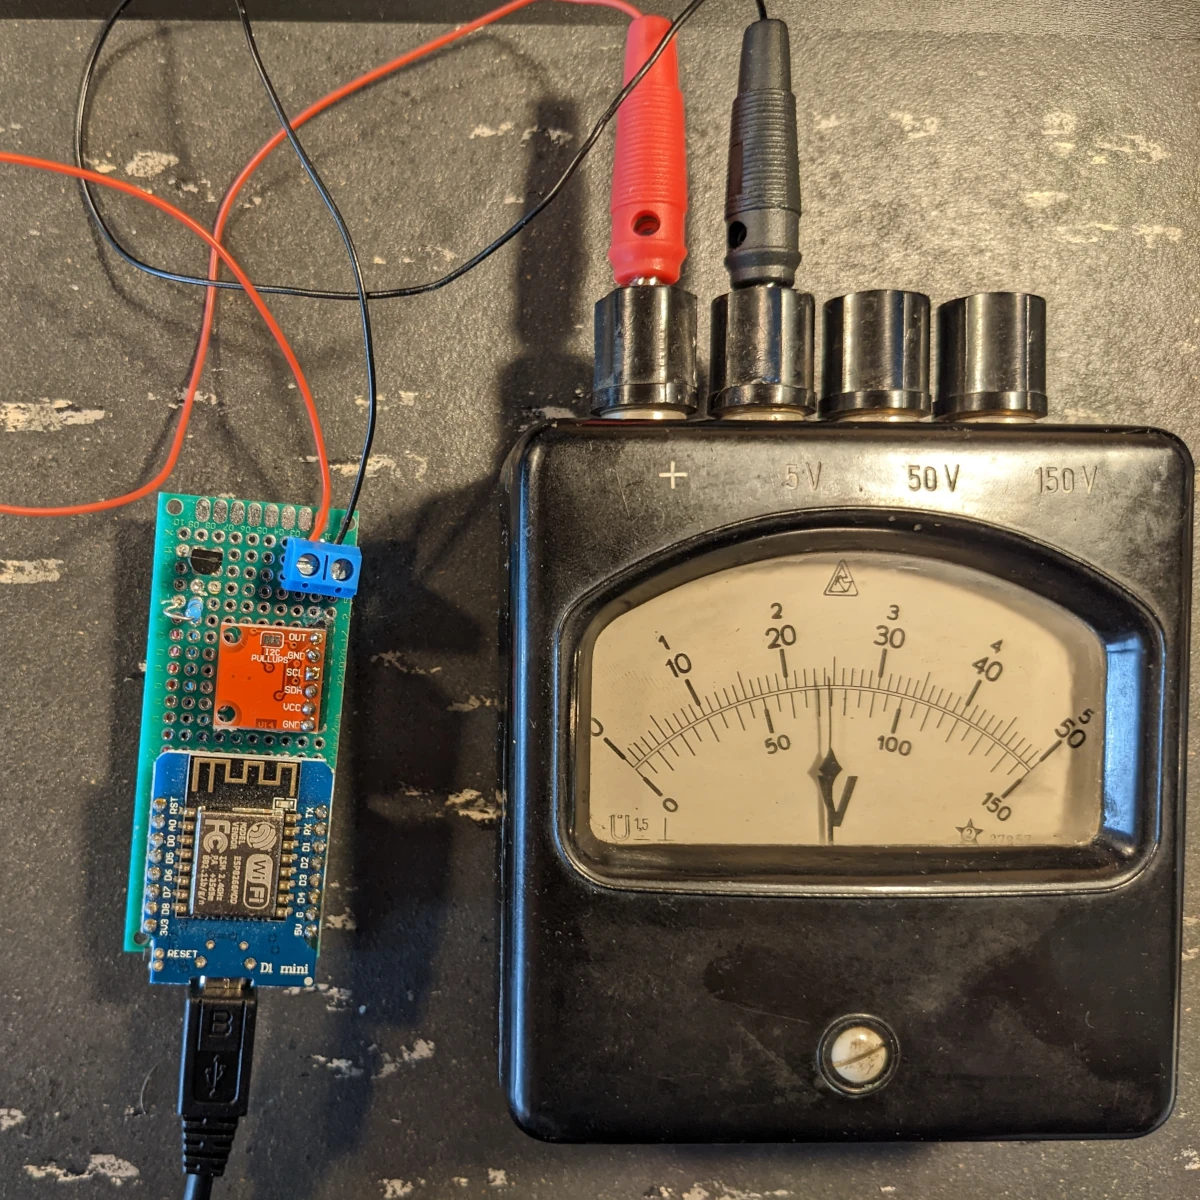 Foto meines Analog-Digital-Analog-Thermometers